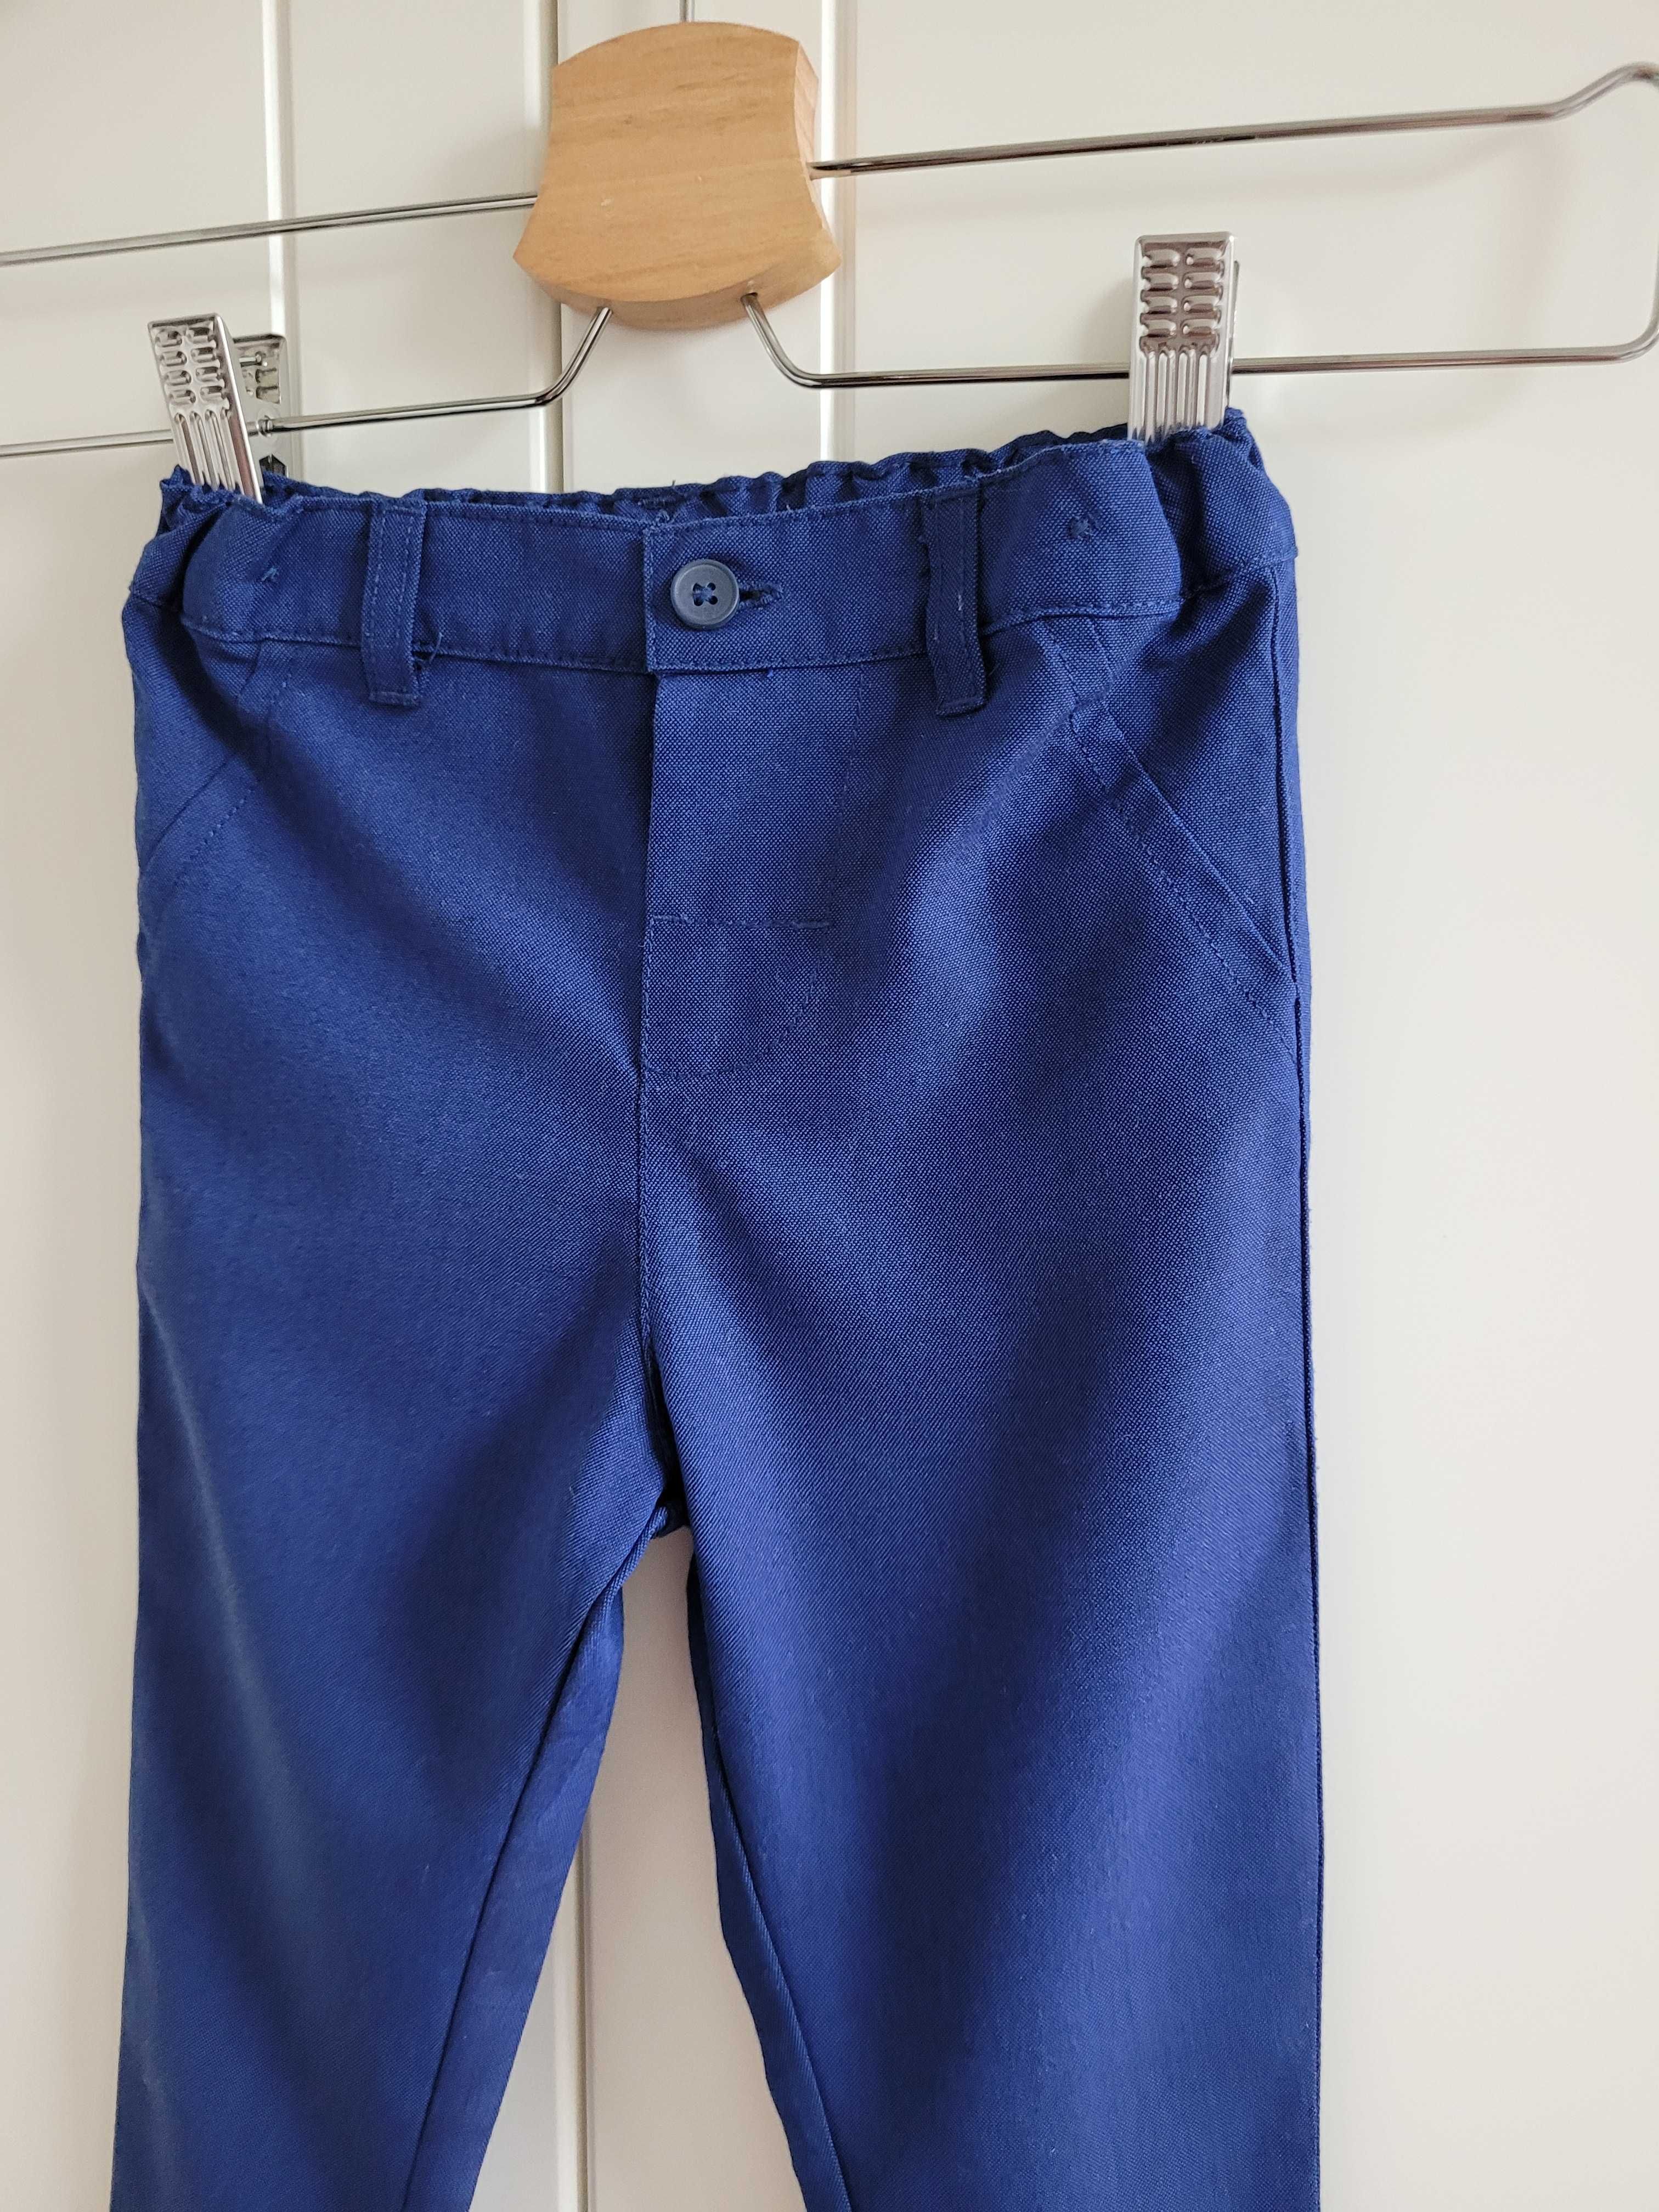 Spodnie eleganckie 86, kobalt, Primark